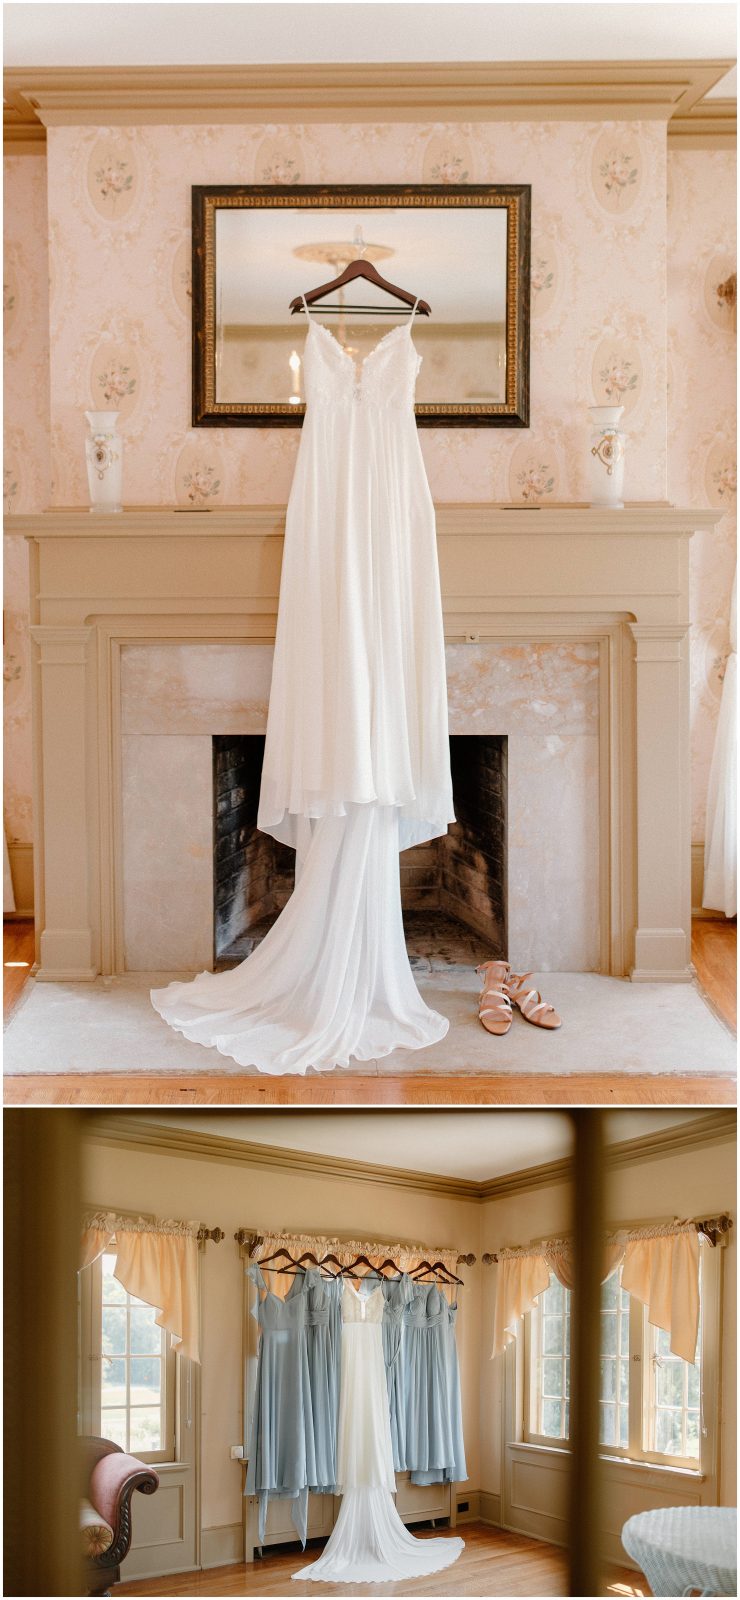 Elegant Wedding Dress Hanging Above Fireplace